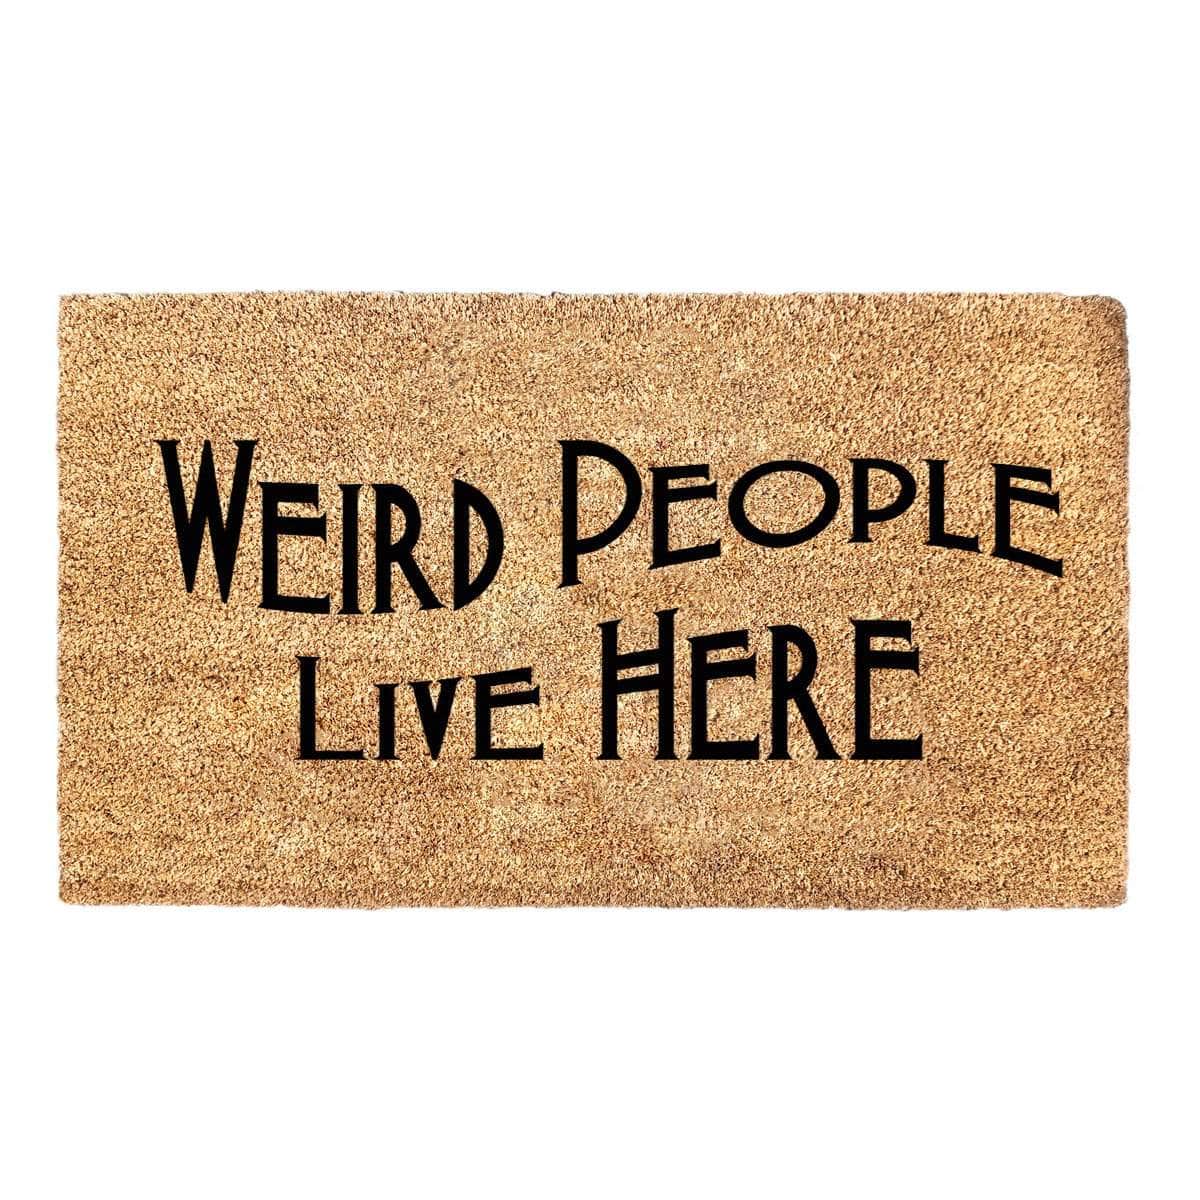 Weird People Live Here - American Horror Story Doormat